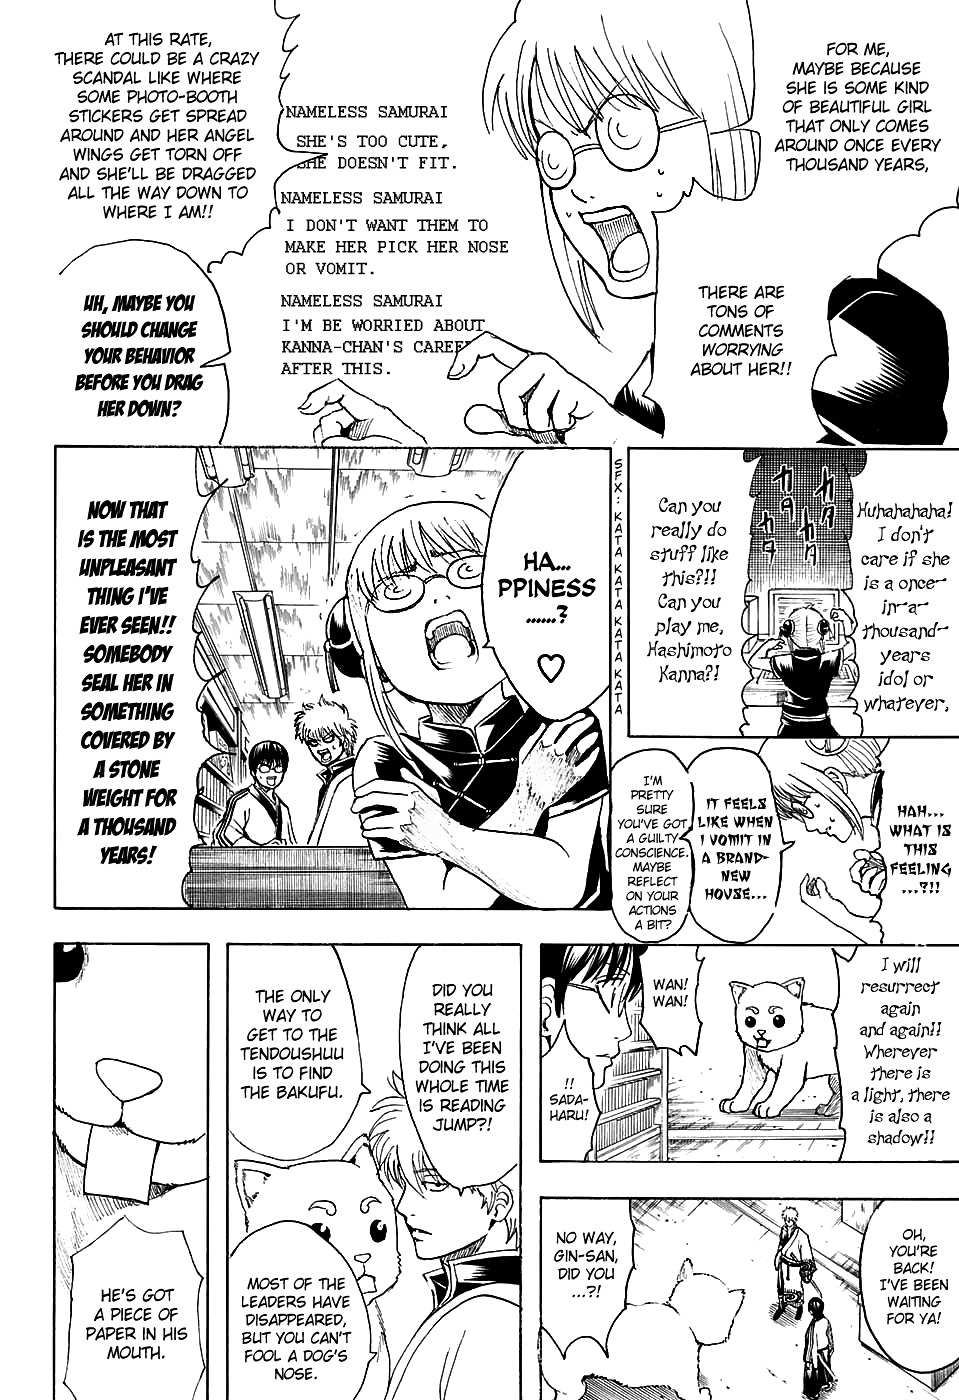 Gintama Vol 67 Chapter 601 If You Skip Reading Jump For One Week Then Make Sure You Read Closely Free Yaoi Hentai Online Yaoi Porn Yaoi Haven Hentai Manga Hentai Manhwa